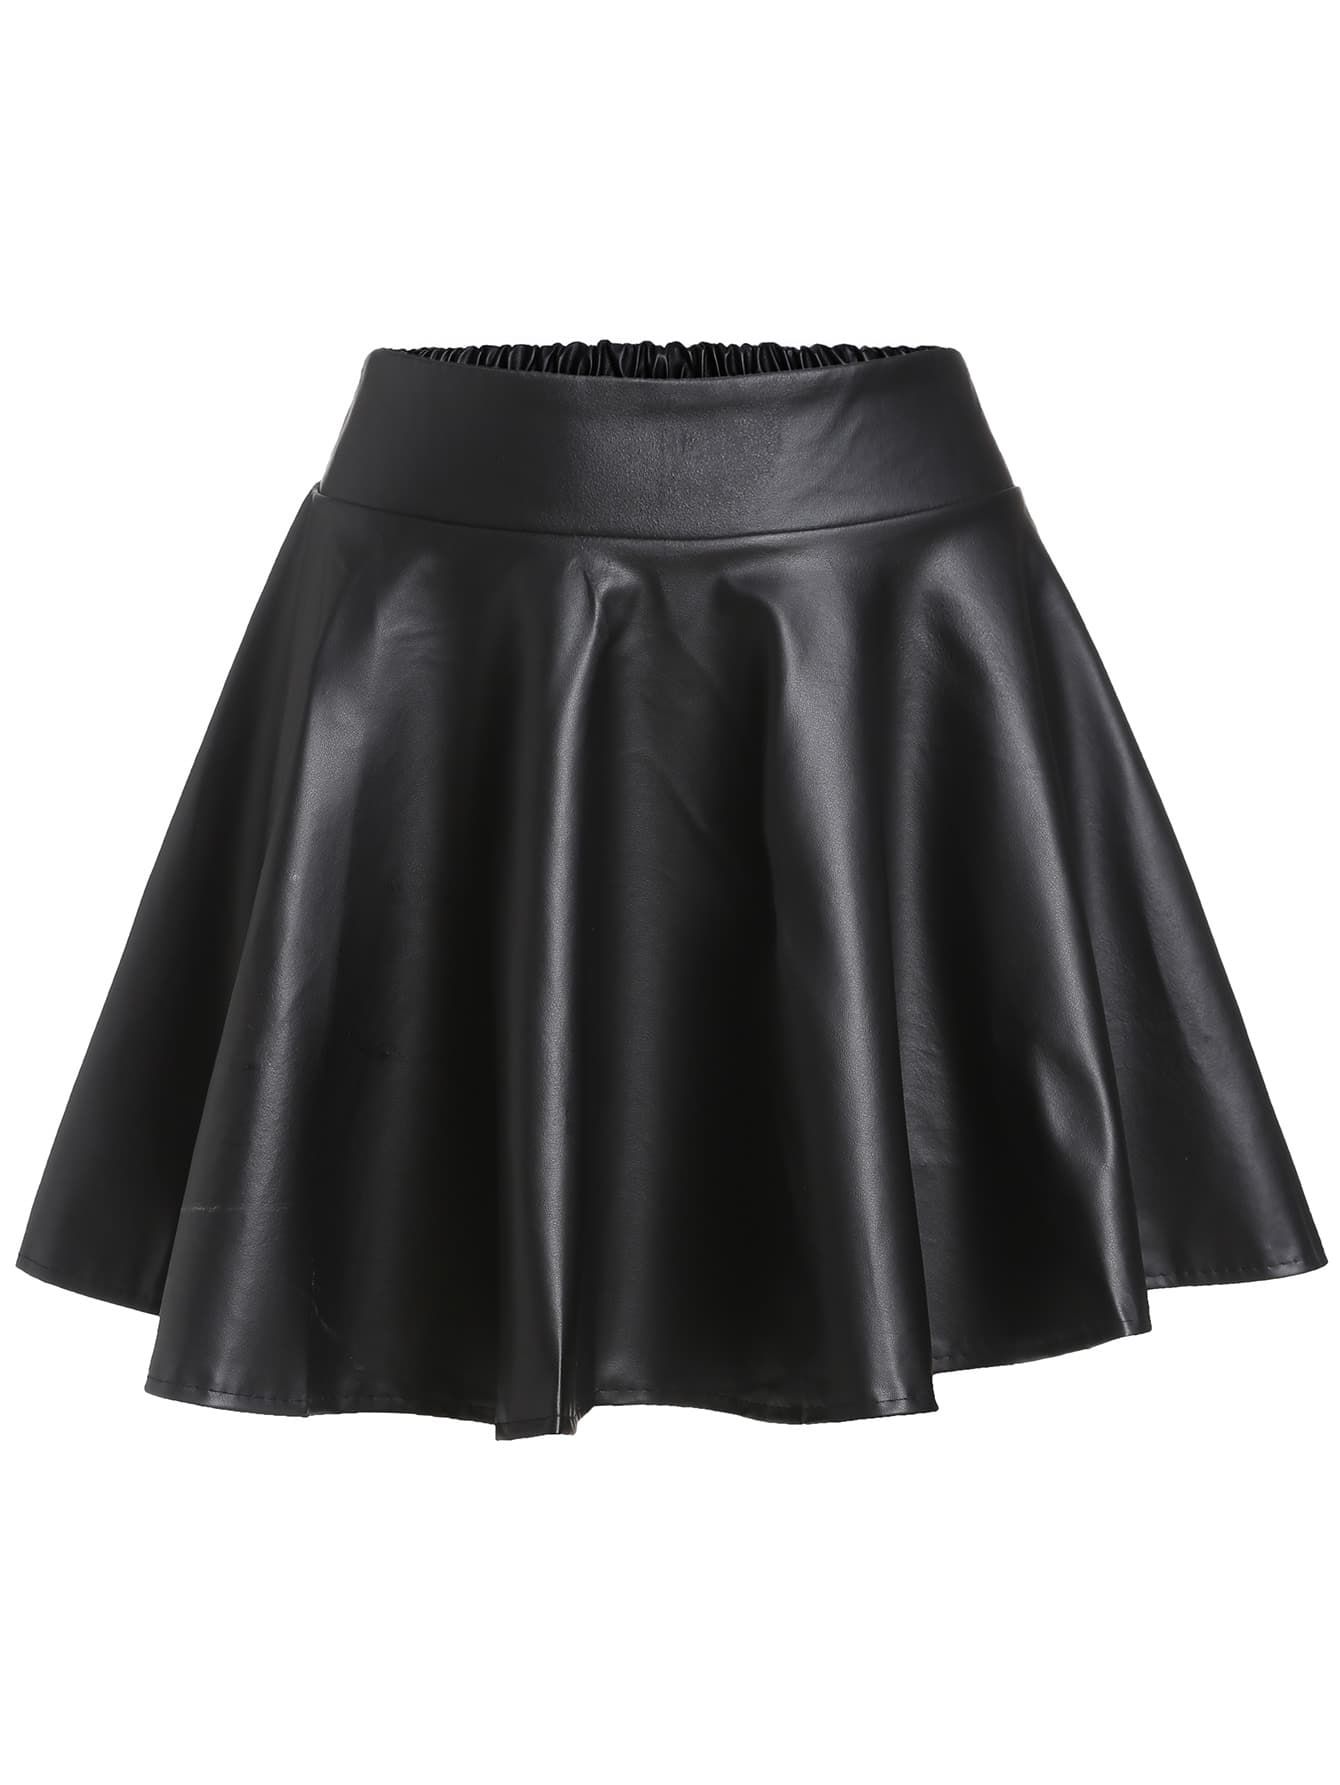 Black Faux Leather Elastic Waist Flare Skirt | ROMWE